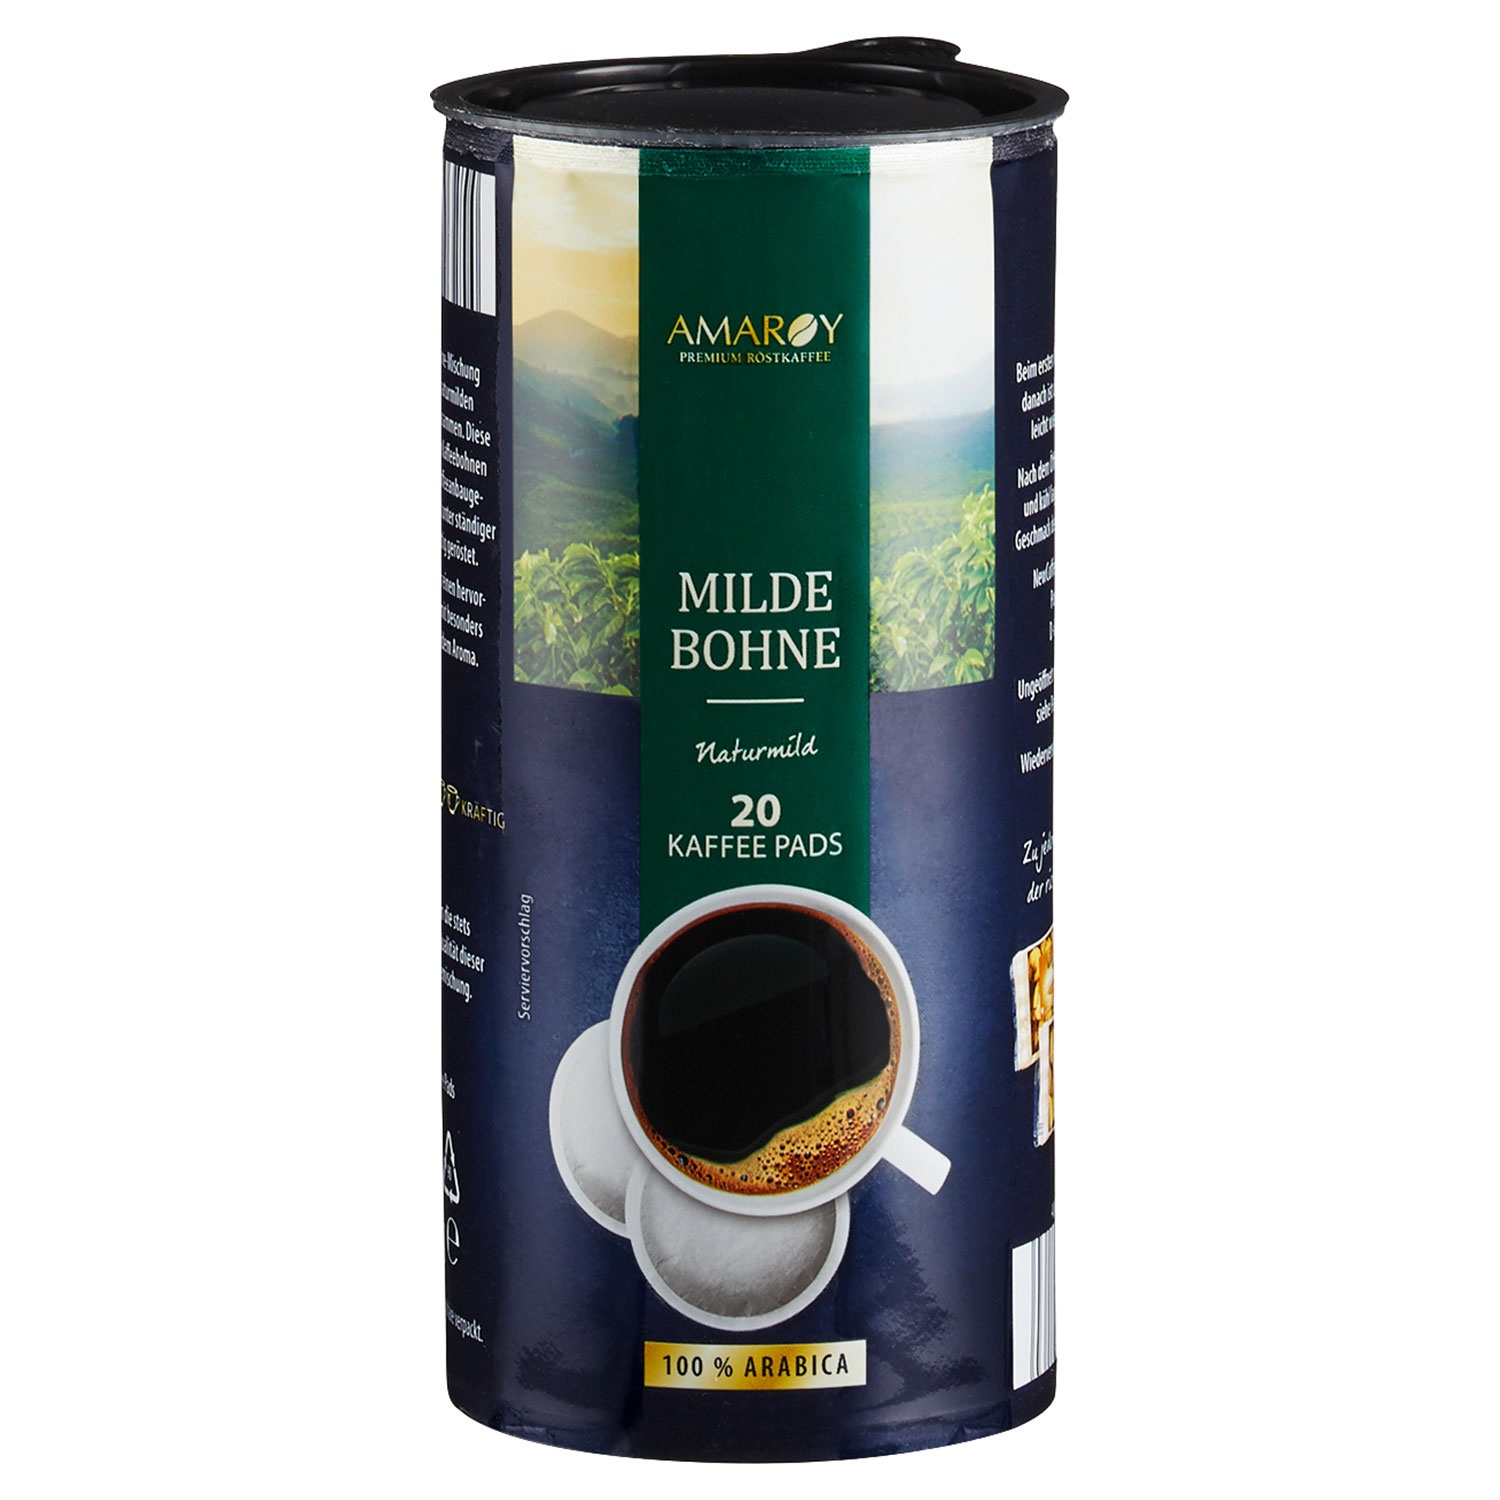 AMAROY Premium Röstkaffee Milde Bohne Naturmild 144 g